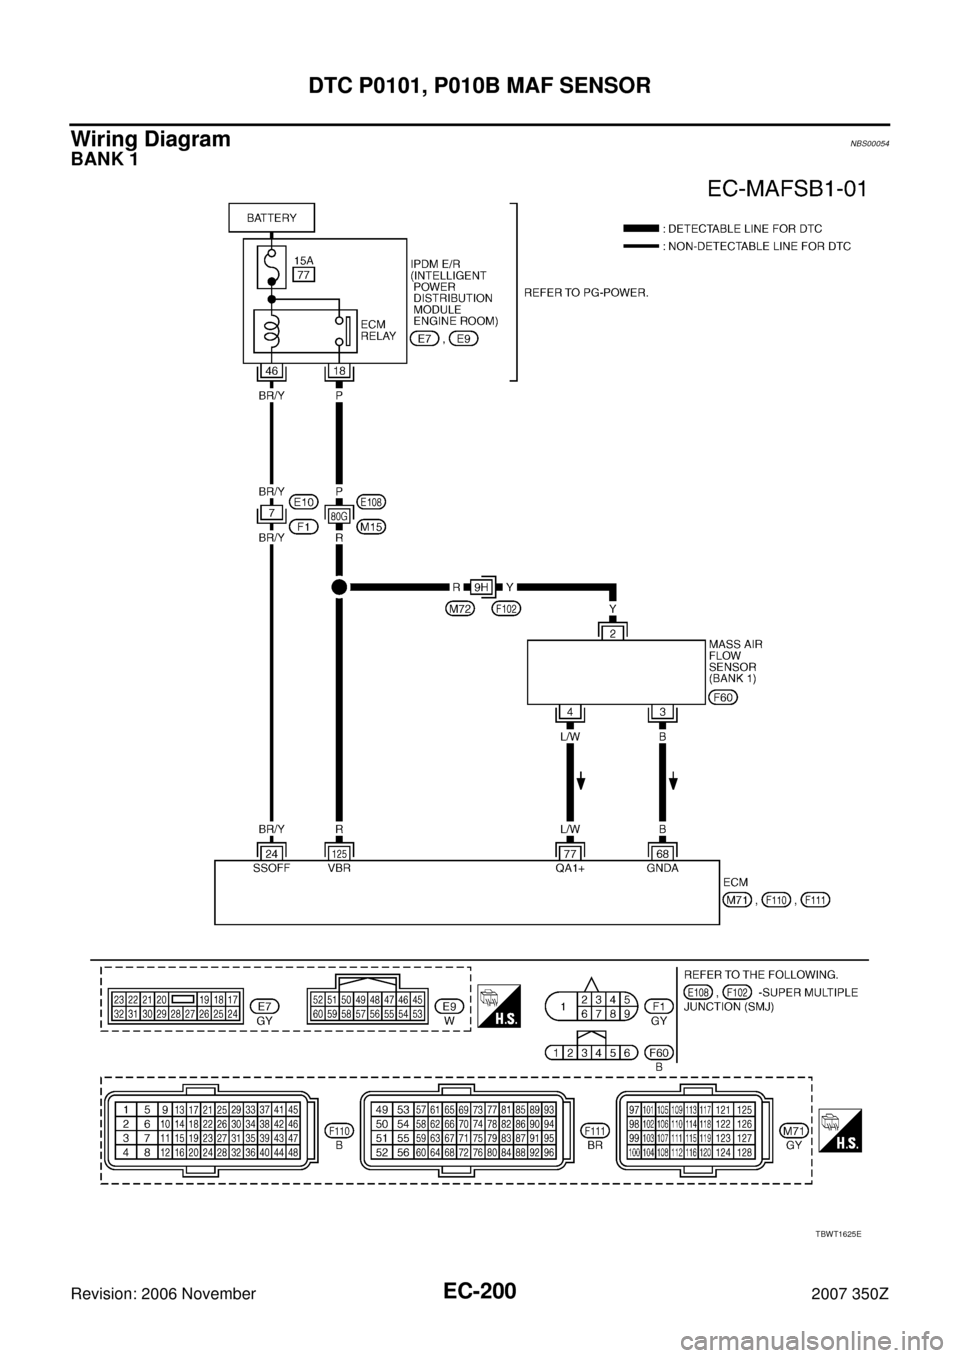 NISSAN 350Z 2007 Z33 Engine Control Service Manual EC-200
DTC P0101, P010B MAF SENSOR
Revision: 2006 November2007 350Z
Wiring DiagramNBS00054
BANK 1
TBWT1625E 